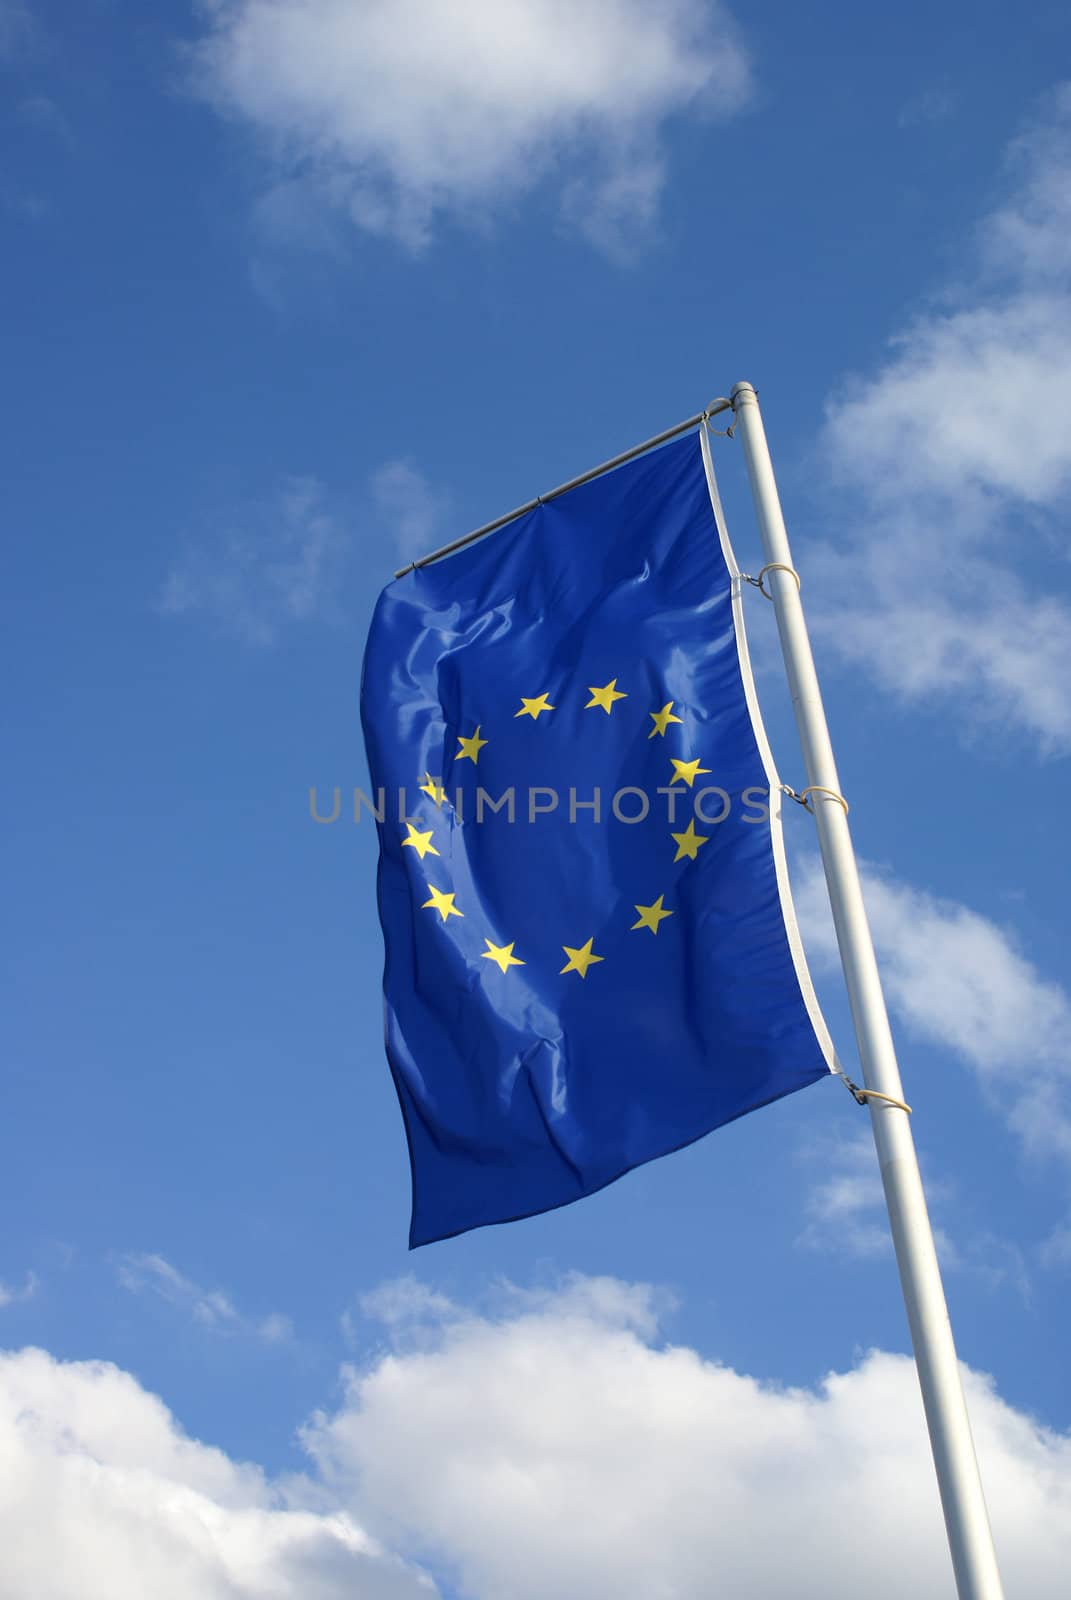 European flag against a blue sky.